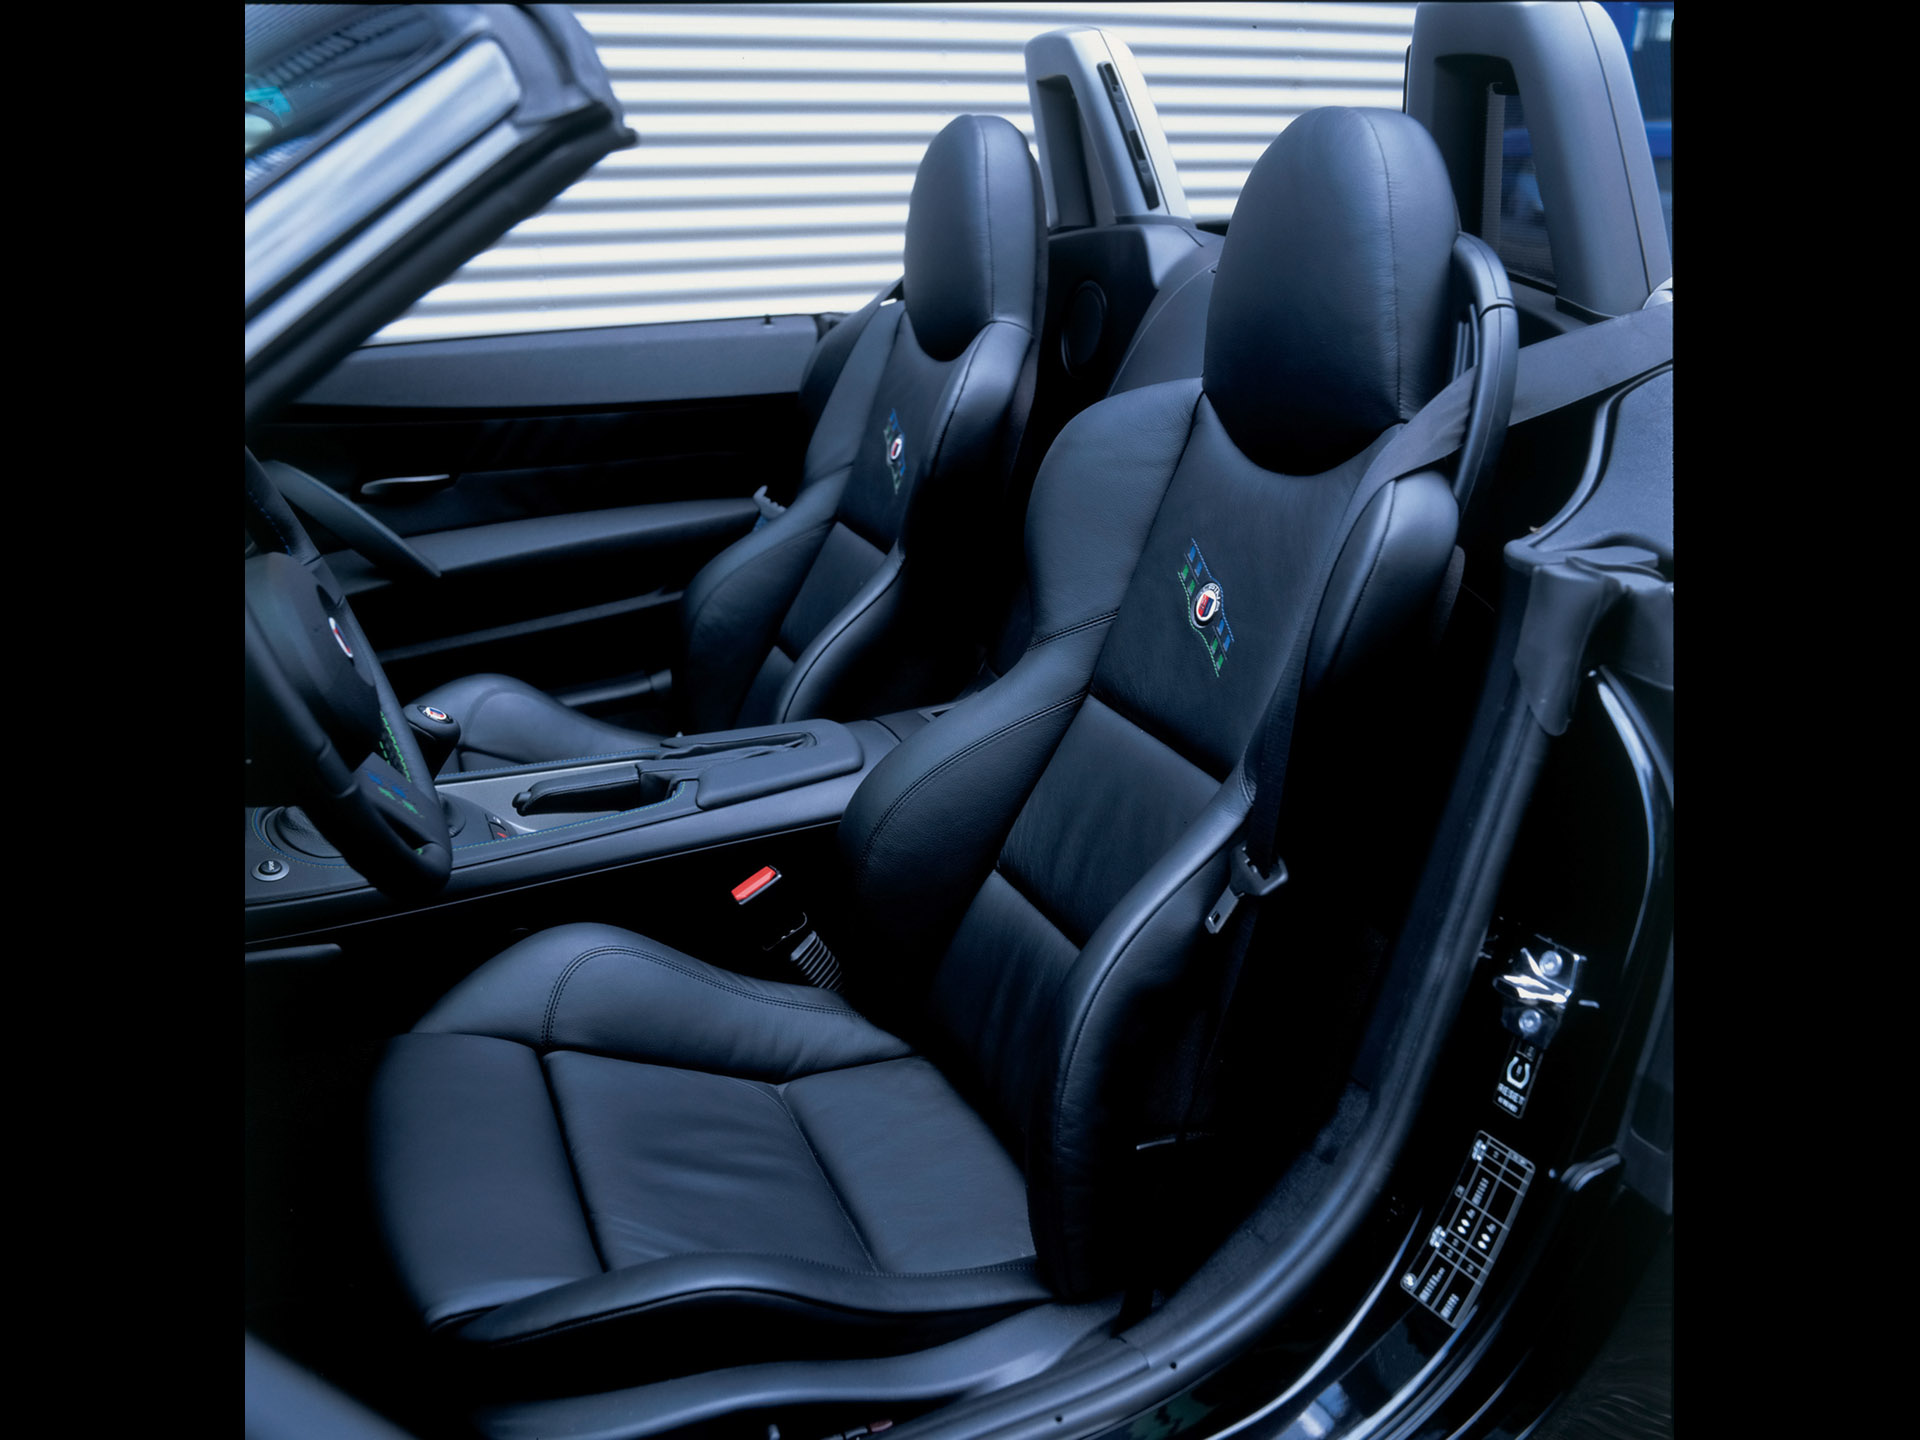 2005 BMW Alpina Roadster S - Seating - 1920x1440 Wallpaper